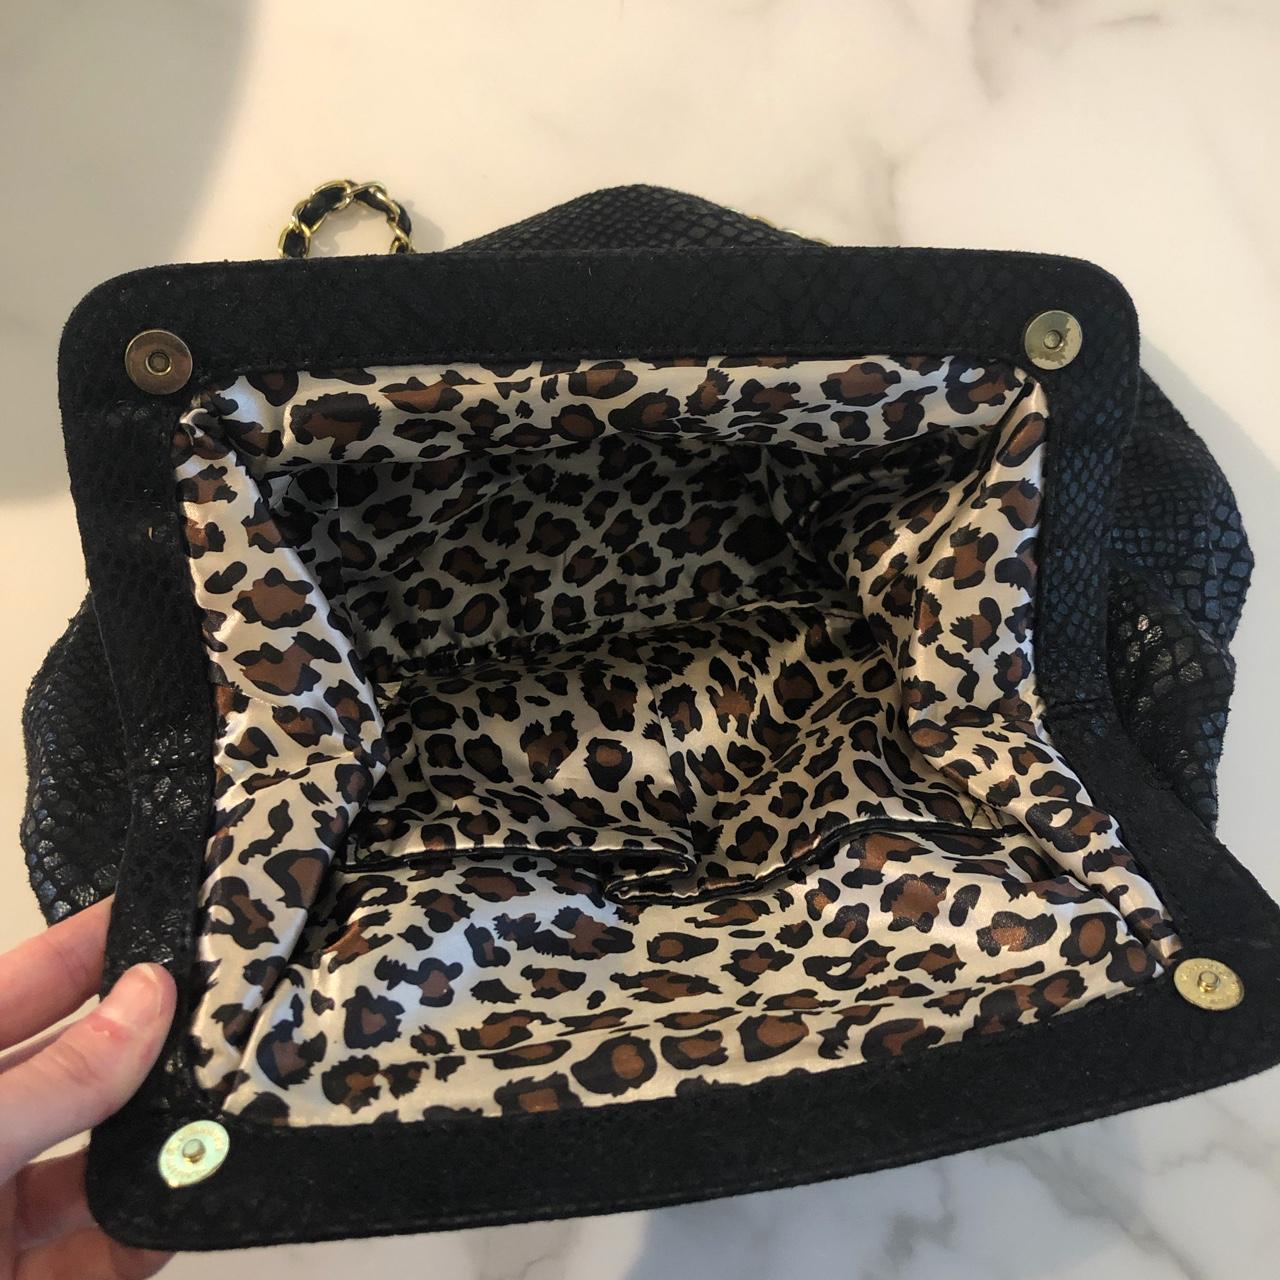 Green Paul's Boutique Bag with Leopard Print - Depop